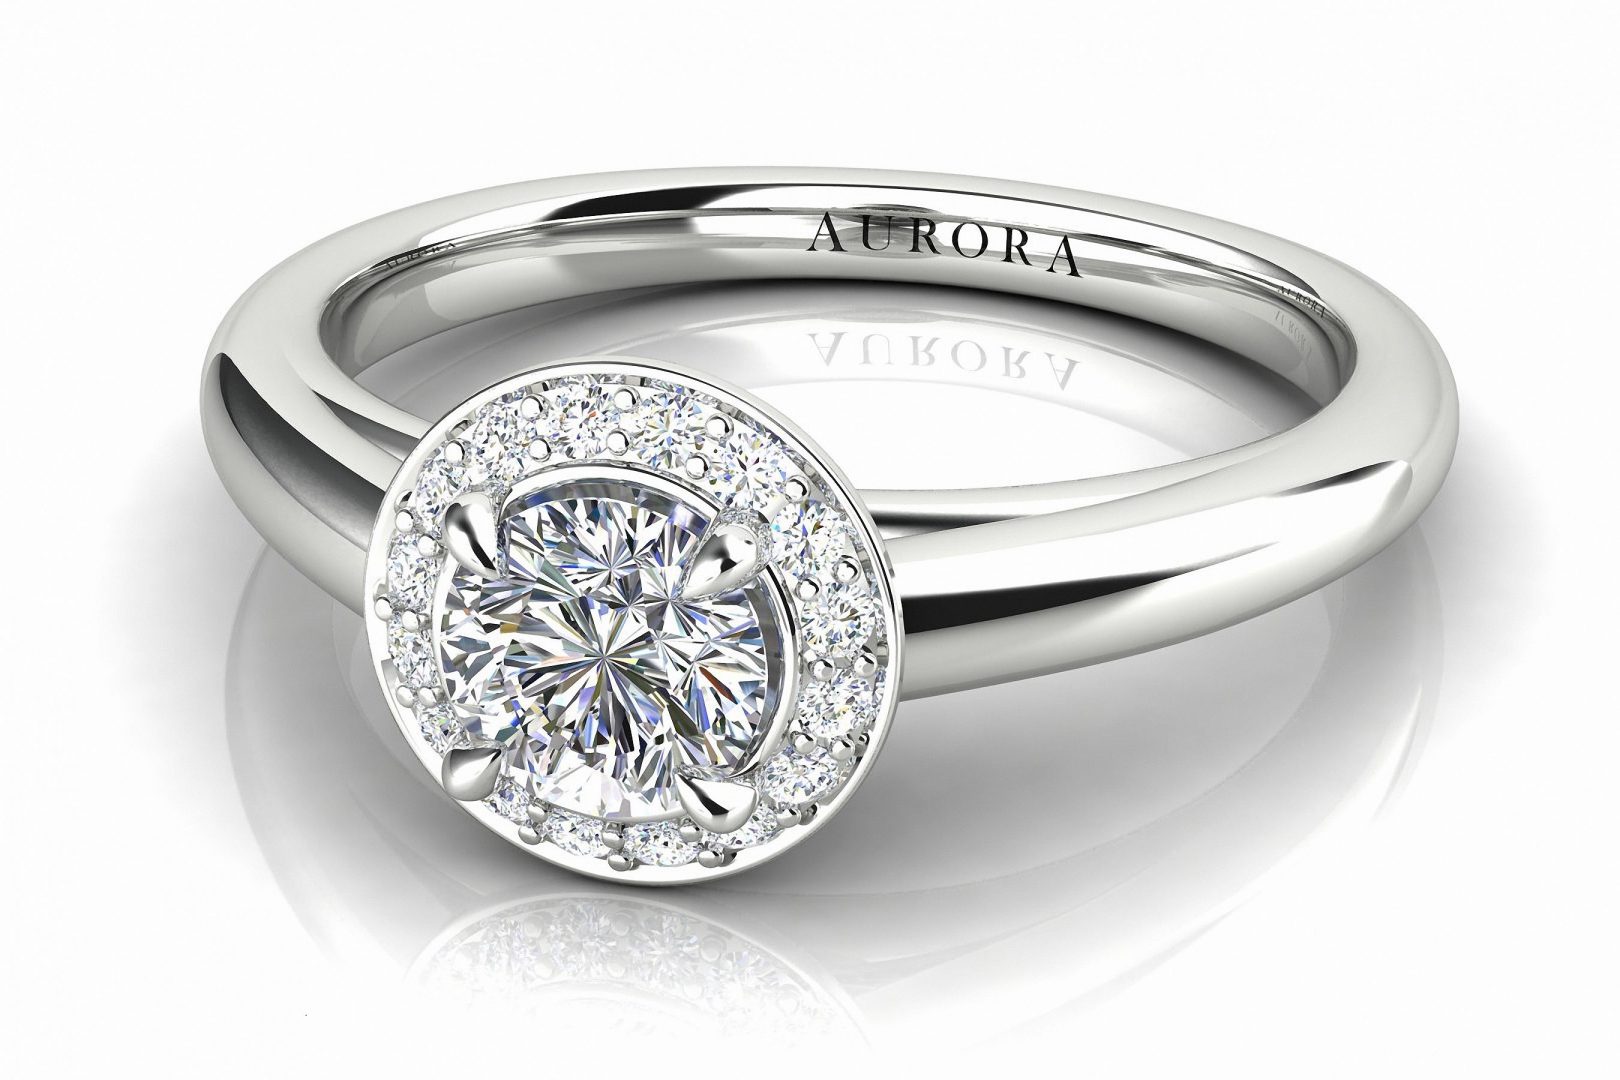 Introducing Aurora, A Brighter Diamond